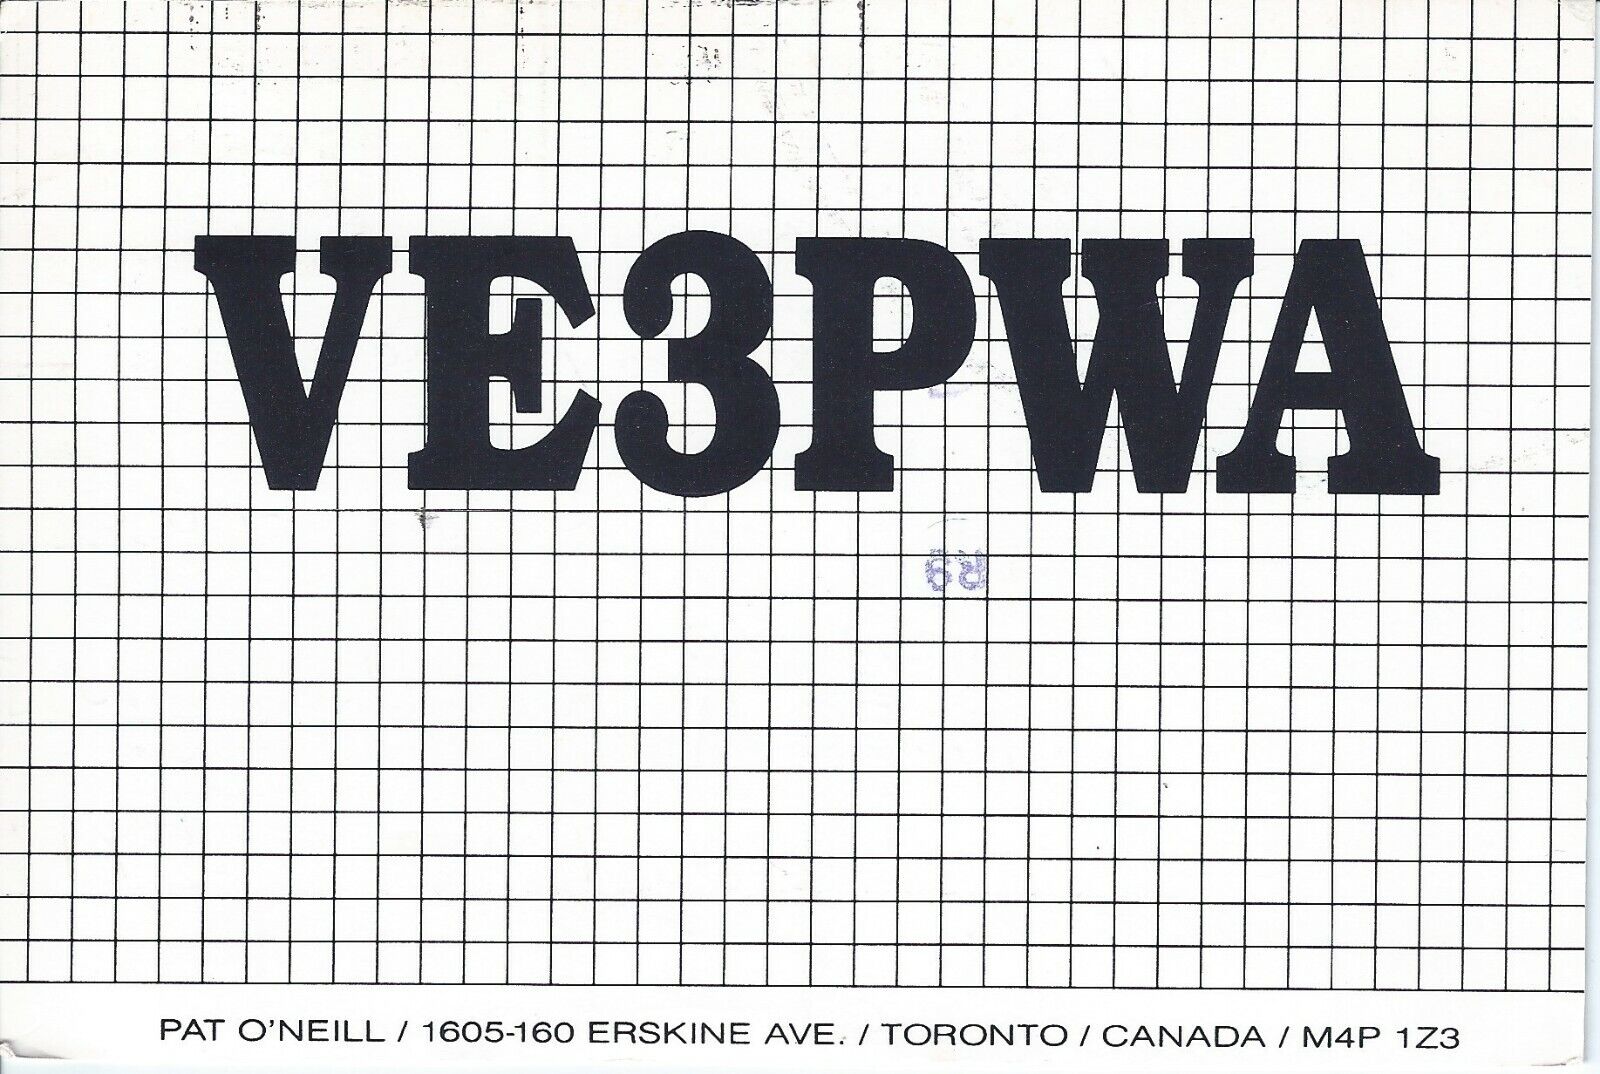 Vintage VE3PWA Toronto Ontario Canada 1988 Amateur Radio QSL Card